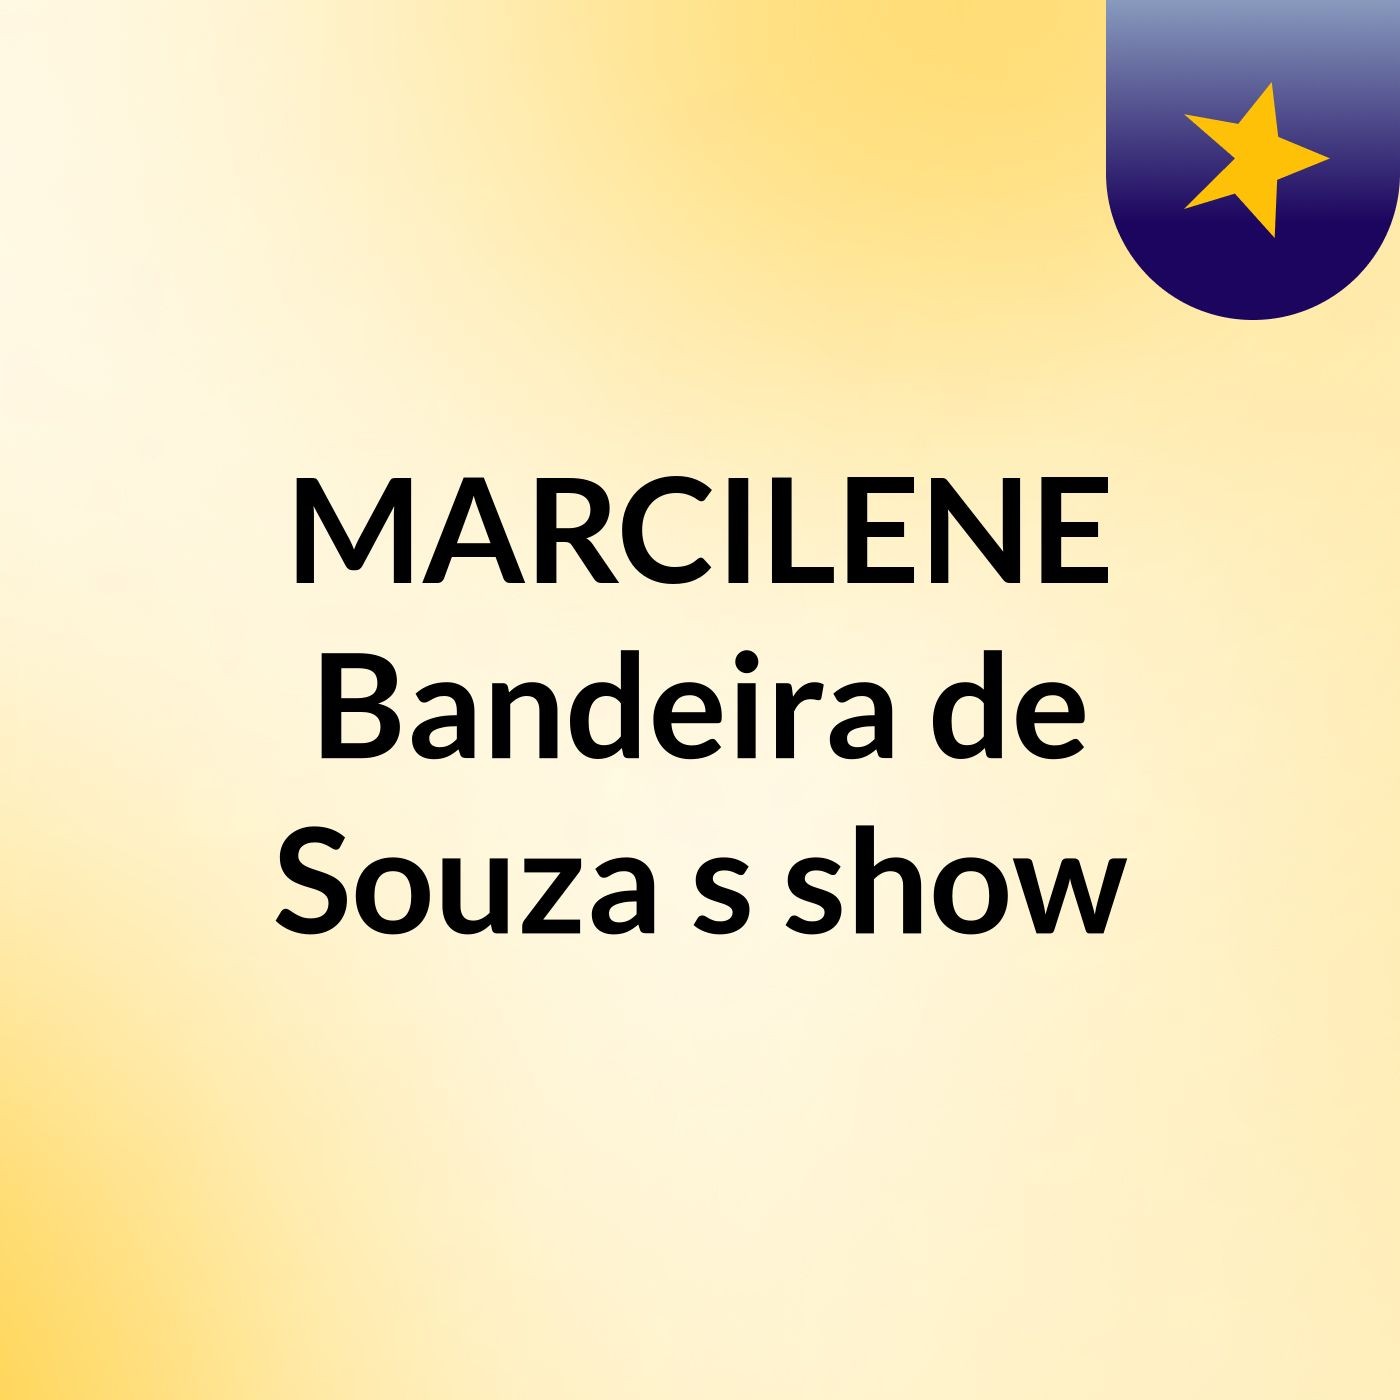 MARCILENE Bandeira de Souza's show